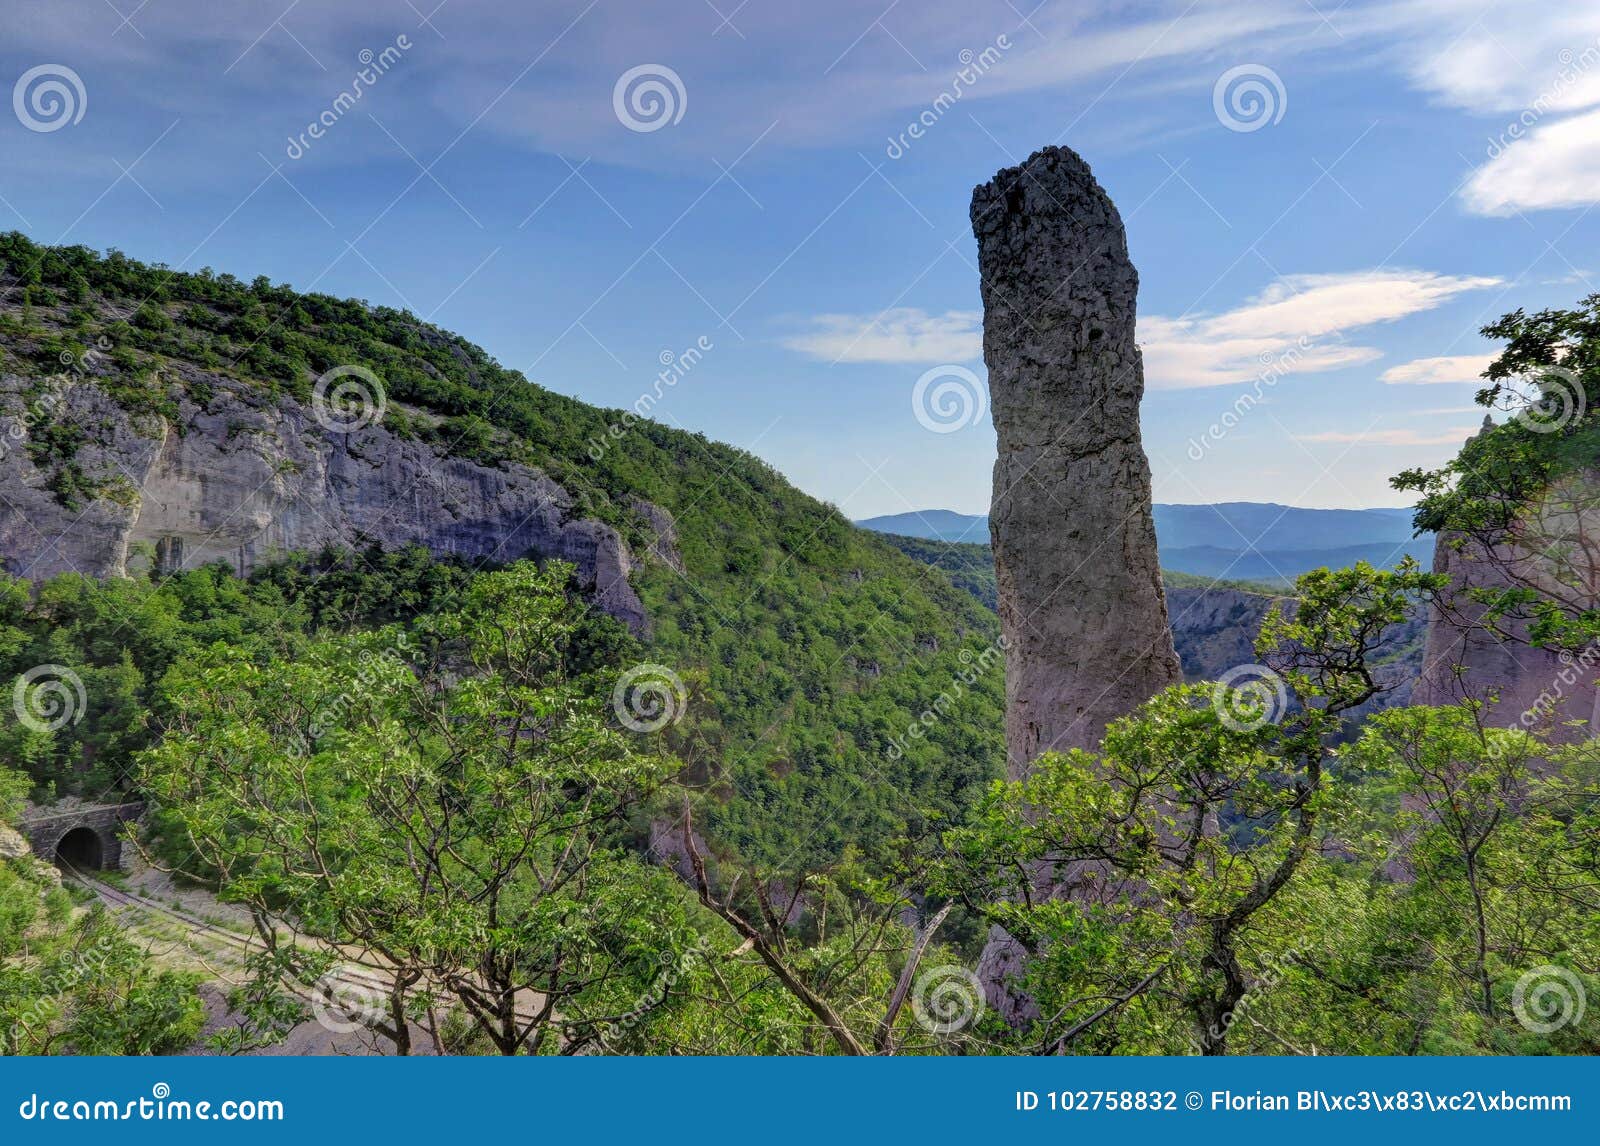 rock tower in vela draga canyon, ucka national park, croatia